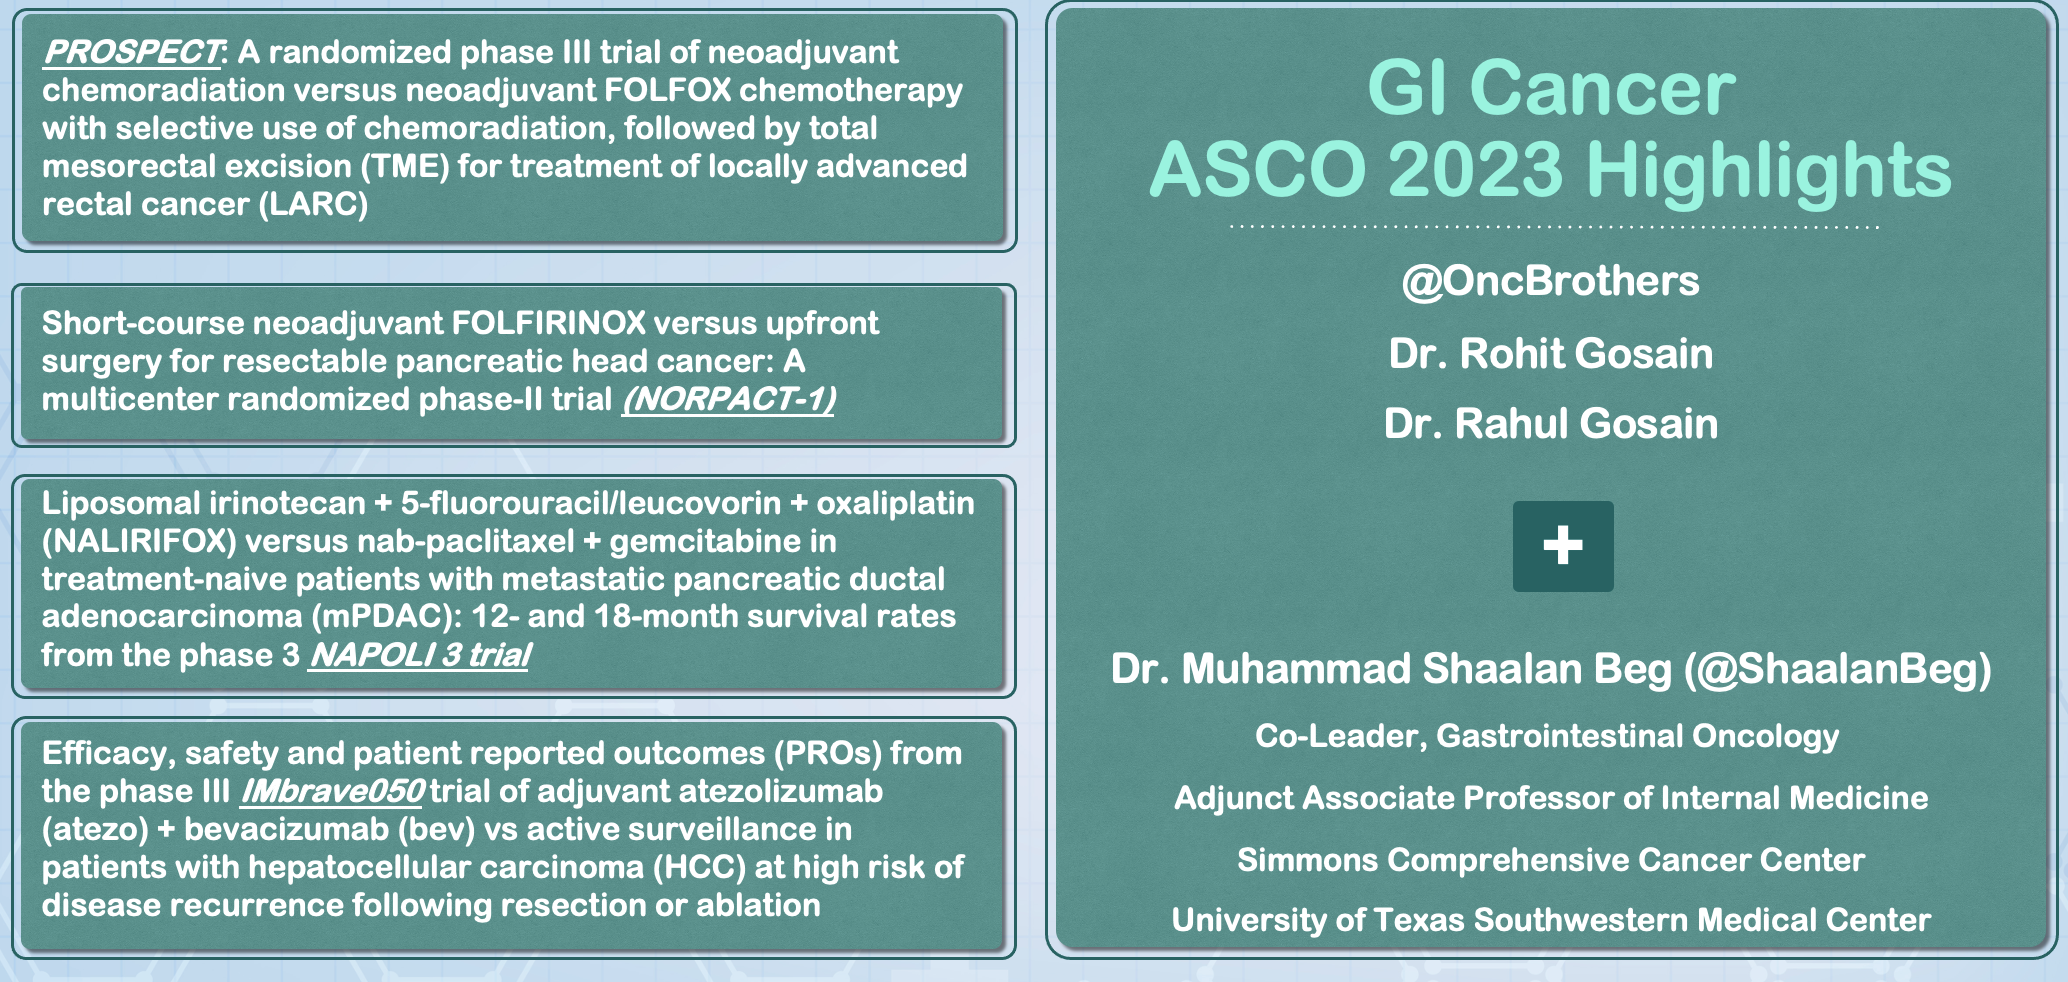 GI Cancer ASCO 2023 Highlights with Dr. Muhammad Shaalan Beg